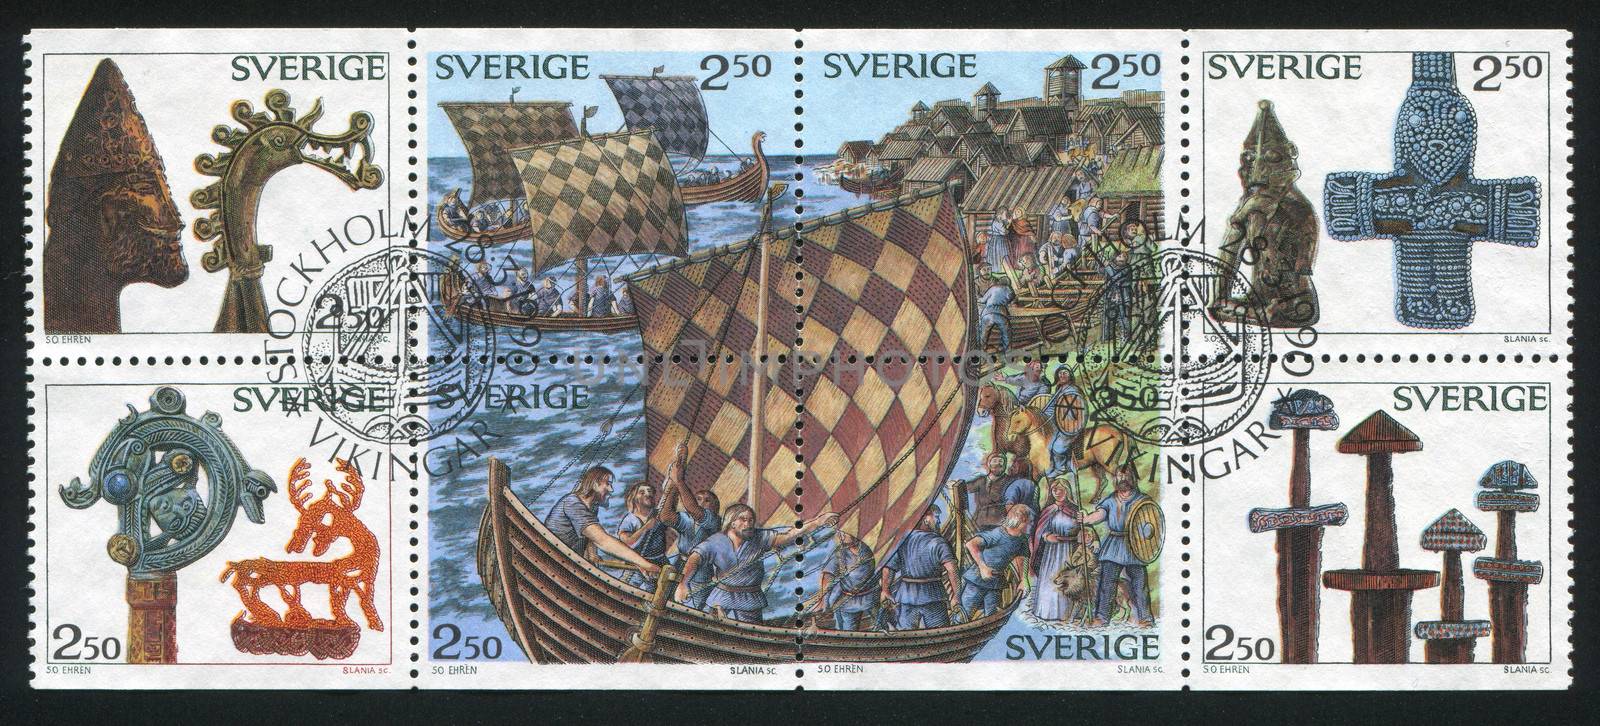 viking longships by rook